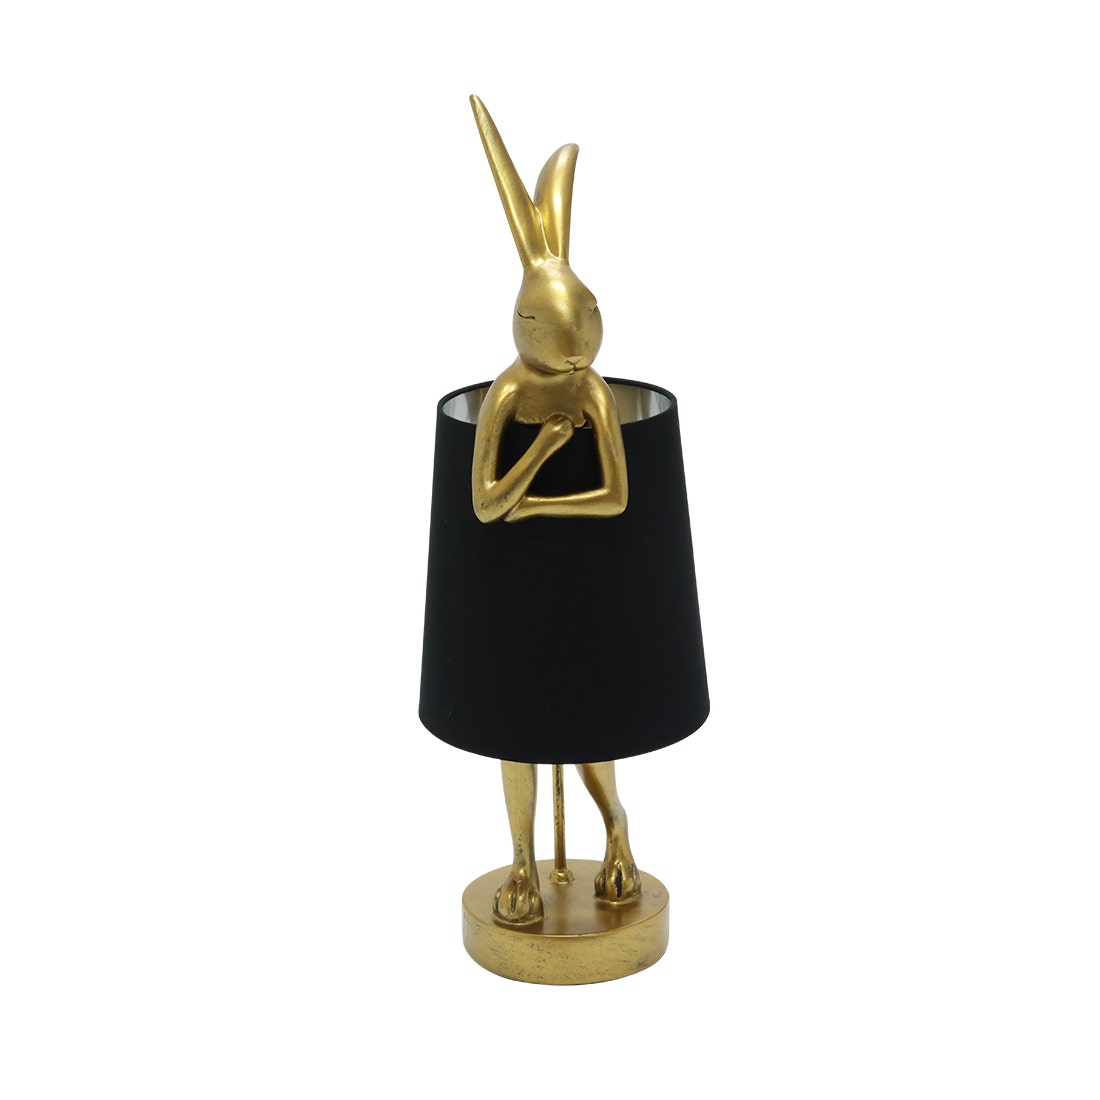 KD TABEL LAMP #53470 RABBIT GOLD / BLACK